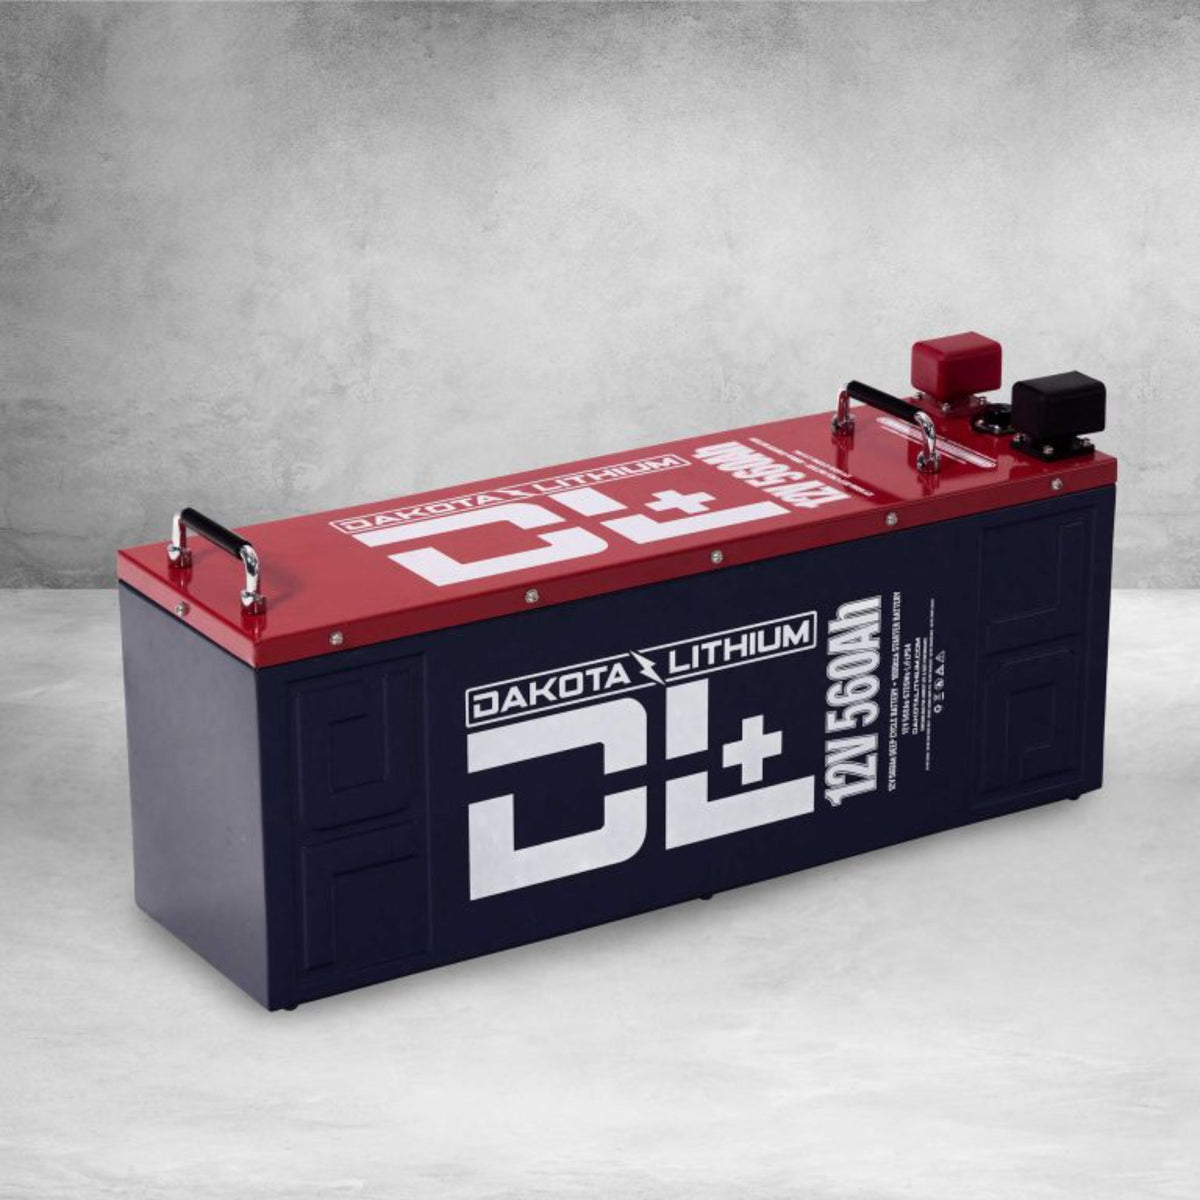 Dakota Lithium  DL+ 12V 560Ah LiFePO4 Battery  CAN Bus Port Included